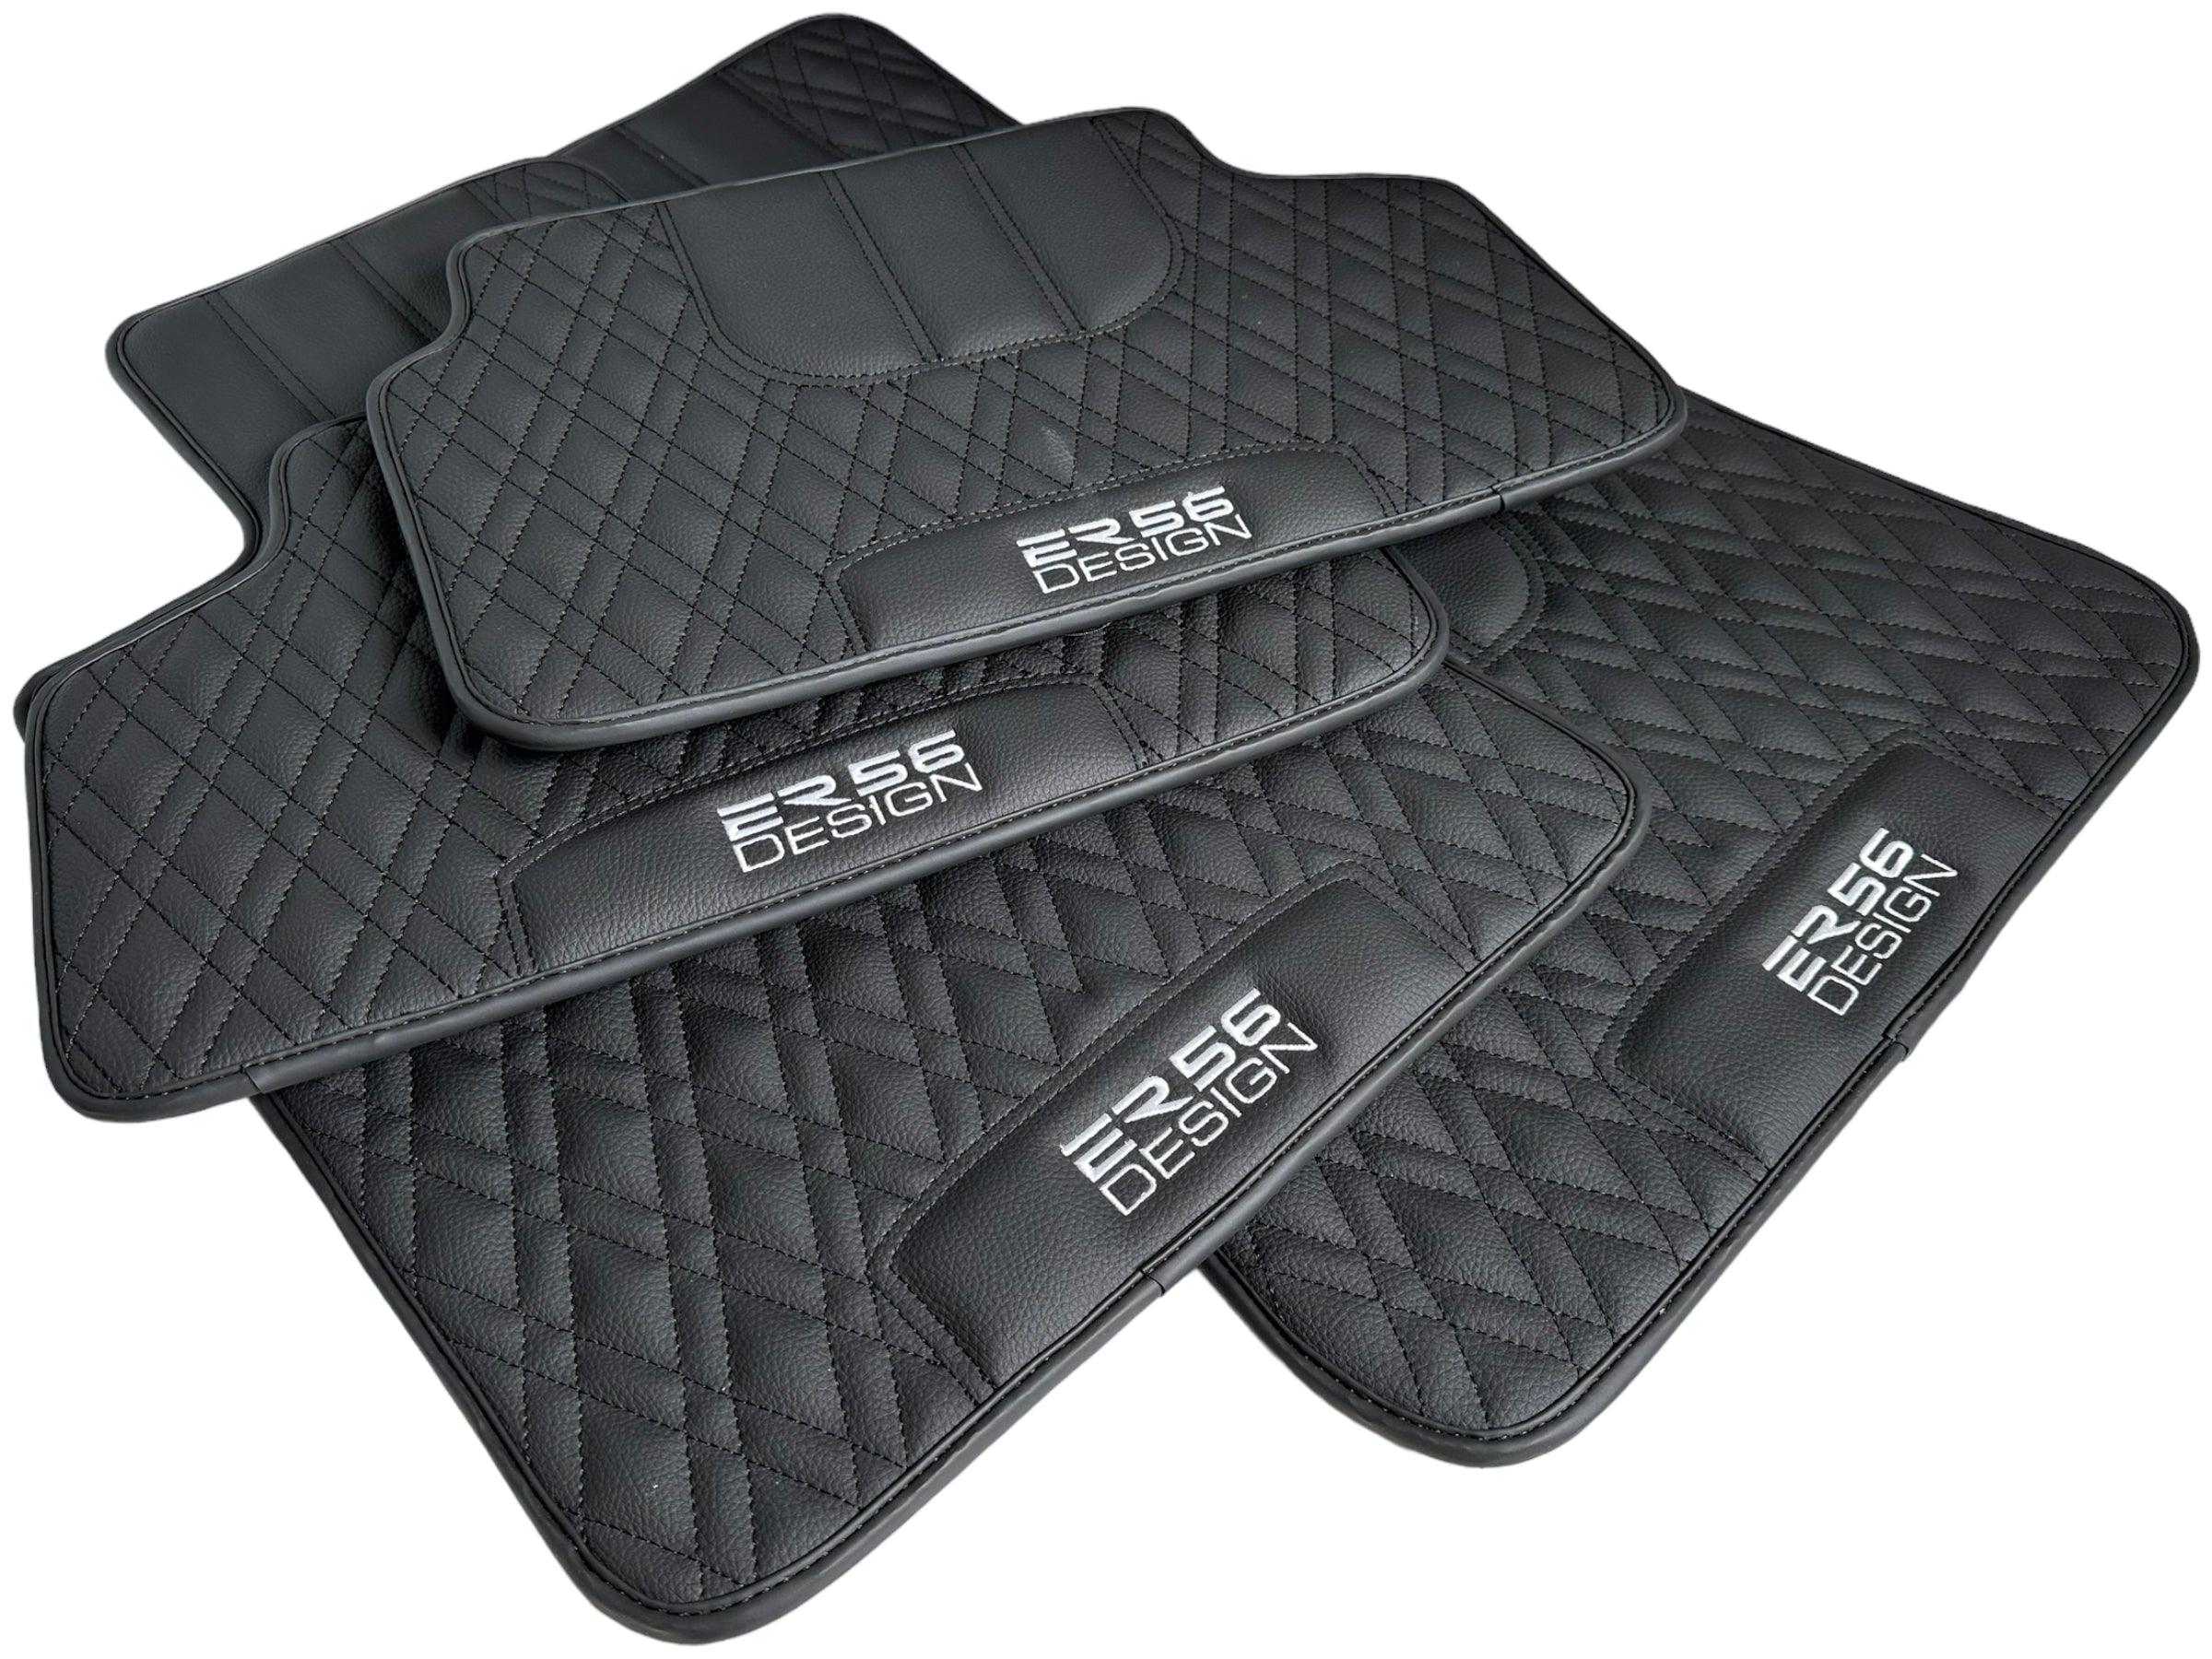 Floor Mats For BMW 3 Series E36 Convertible Black Leather Er56 Design - AutoWin